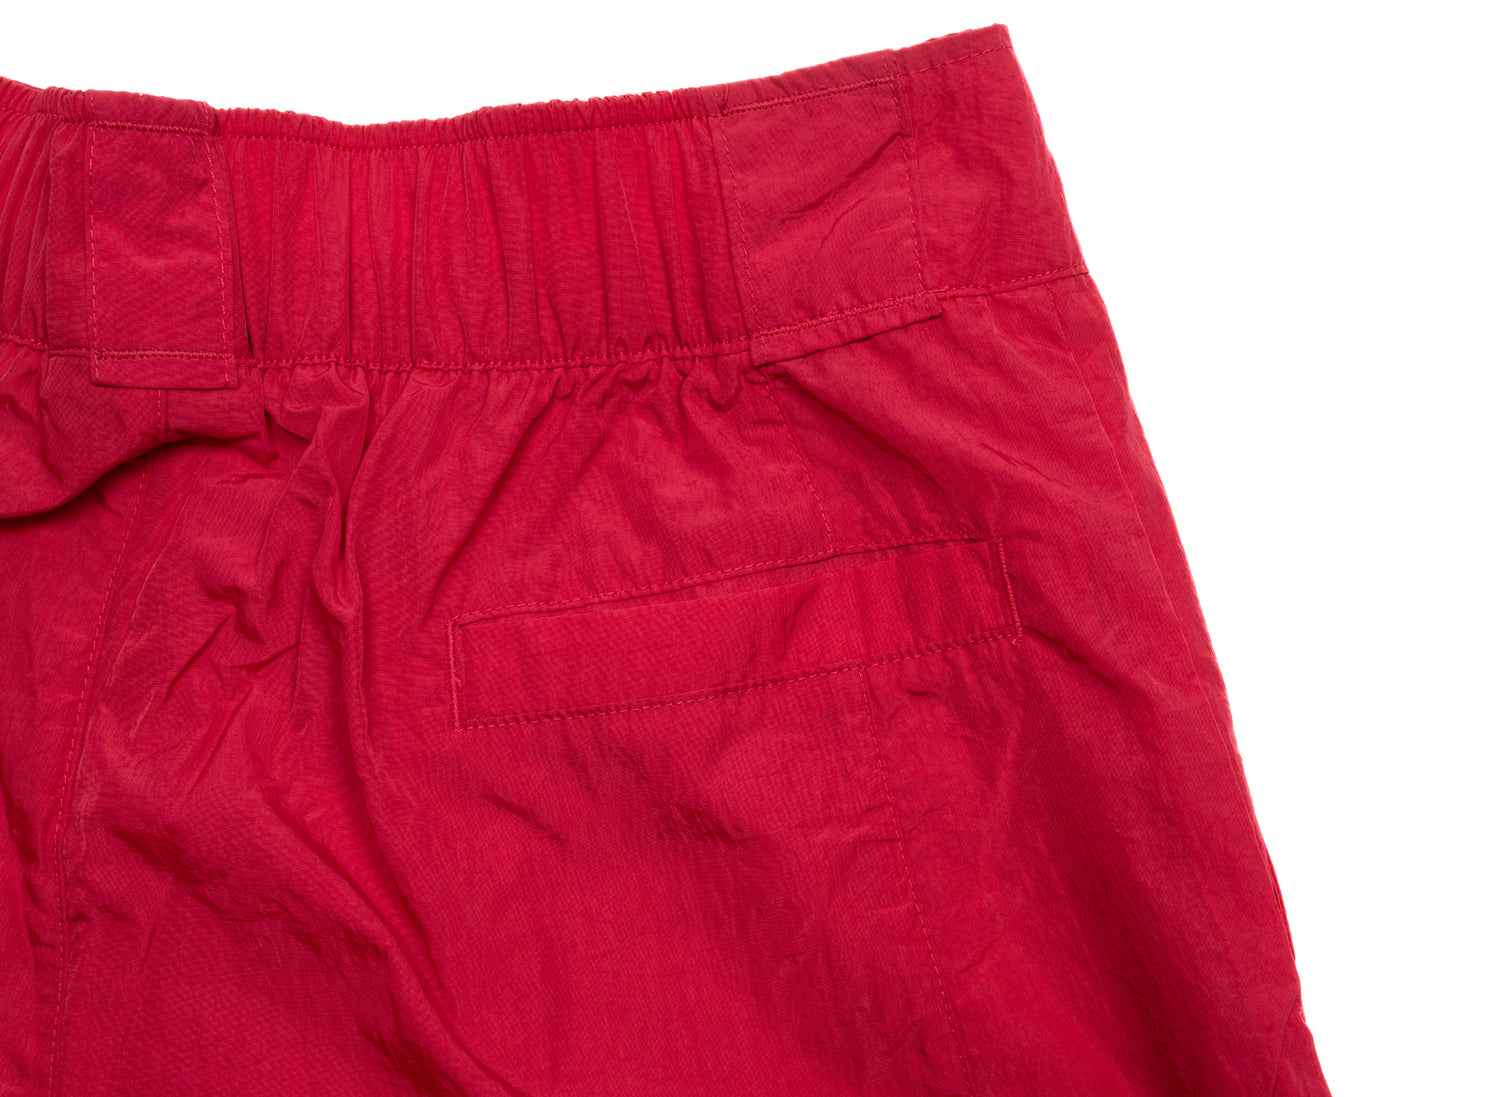 Jordan Essentials Women's Utility Pants DM5034-010